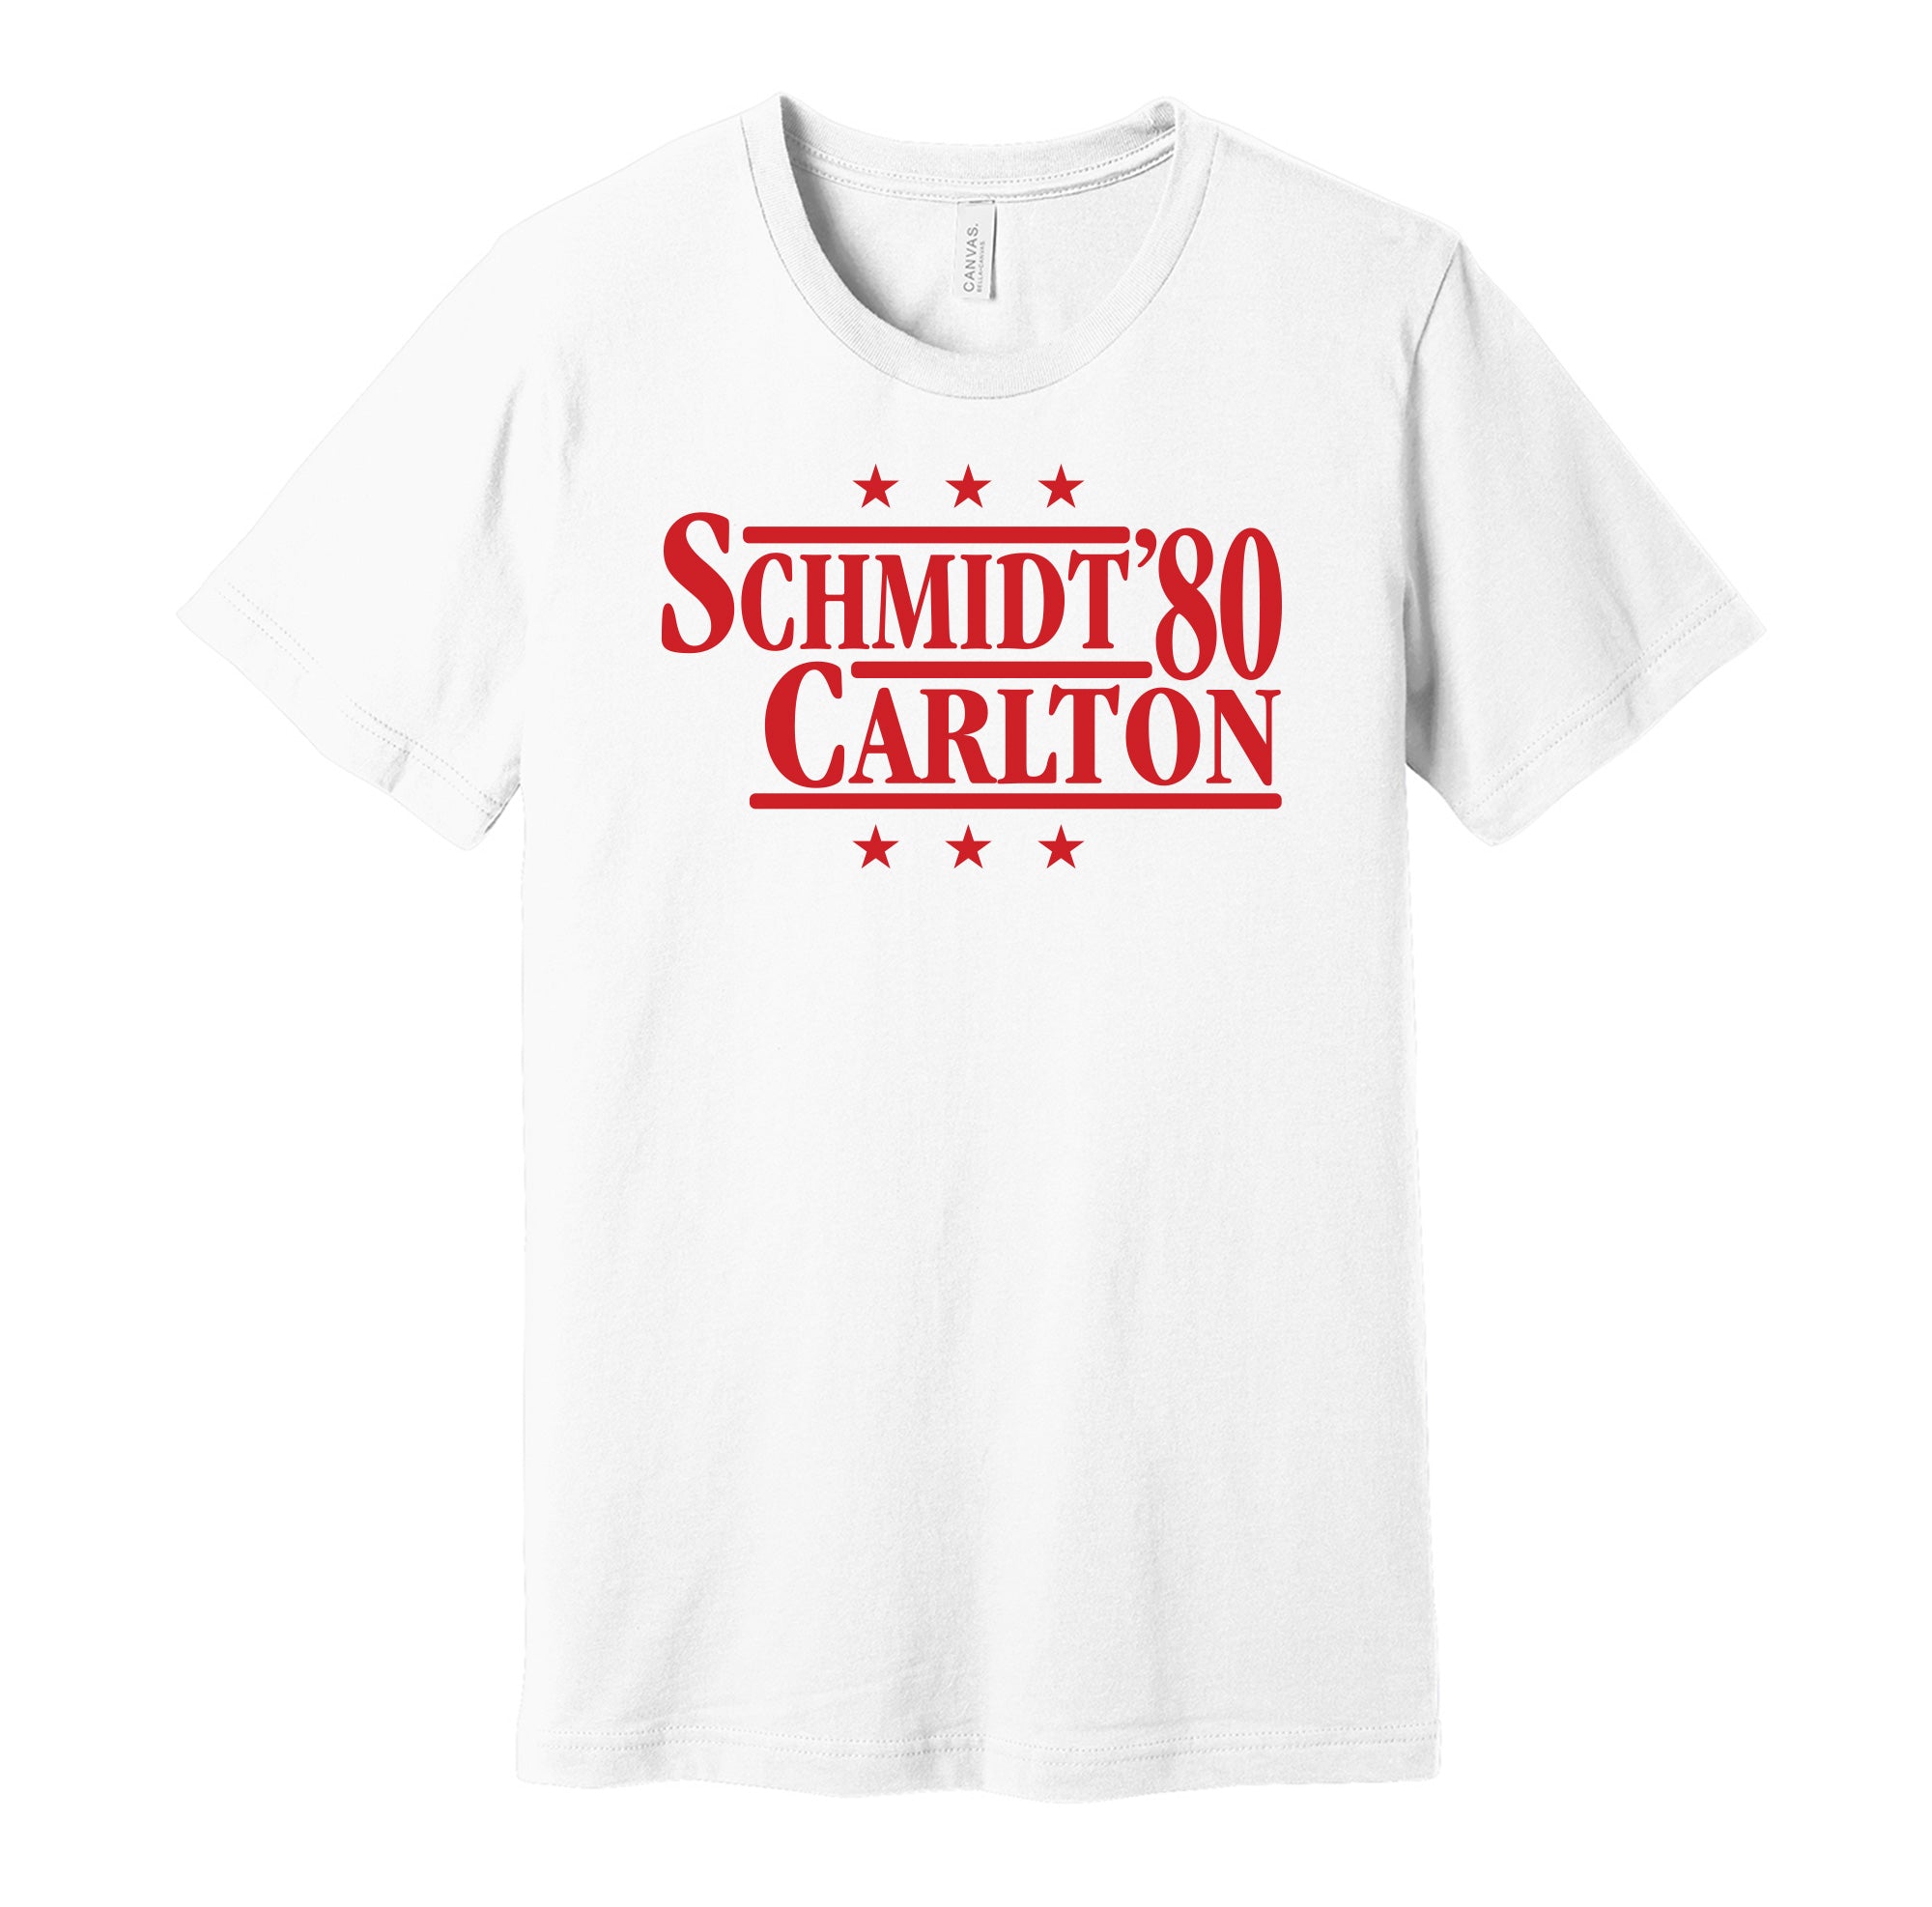 Schmidt & Carlton '80 - Philadelphia Baseball Legends Political Campaign Parody T-Shirt - Hyper Than Hype Shirts XXL / White Shirt